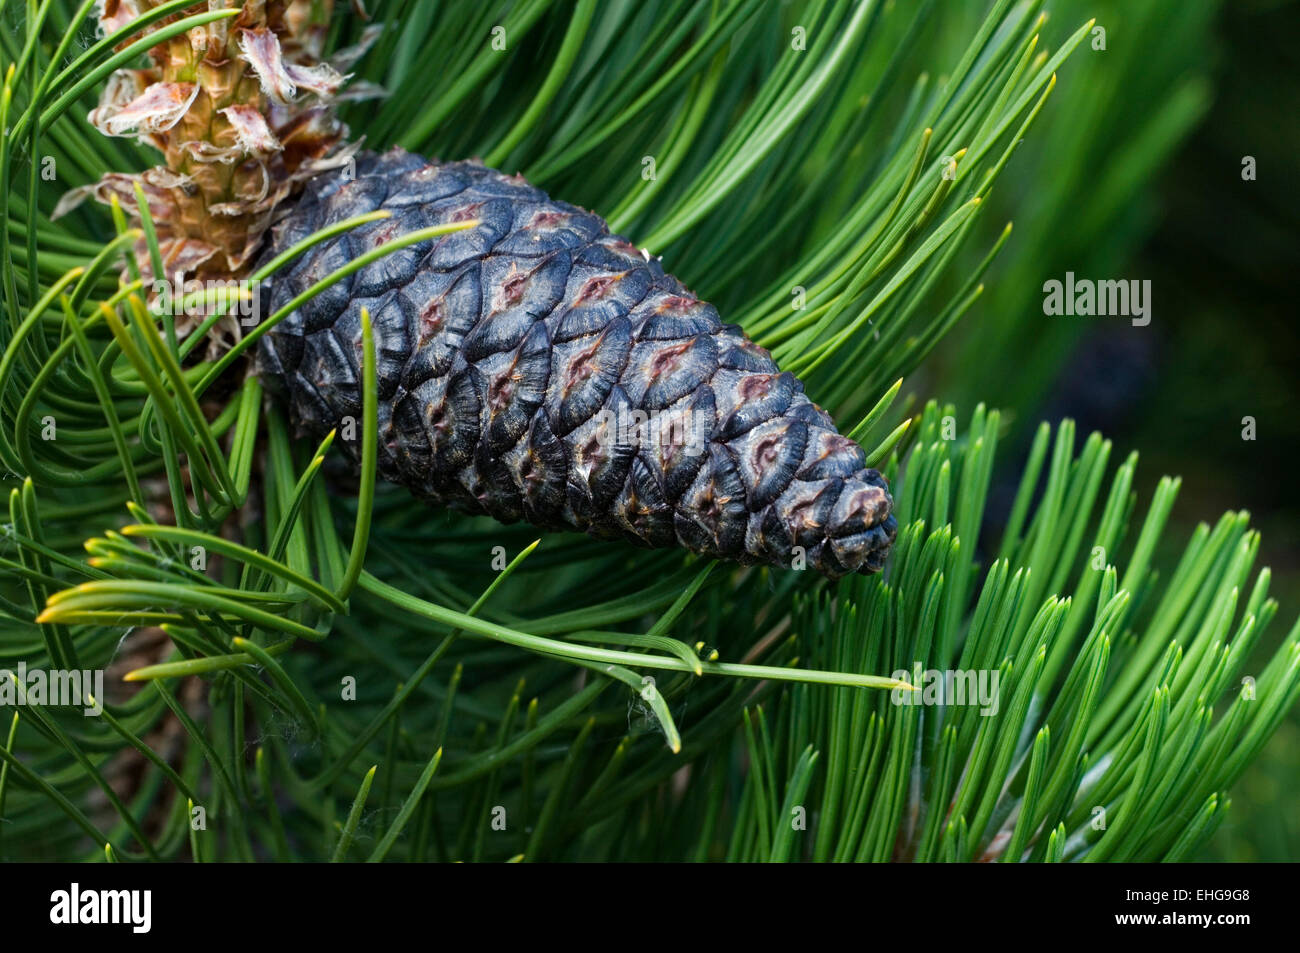 Bosnian pine (Pinus heldreichii / Pinus leucodermis) close up of pine cone and needles, Bosnia Stock Photo